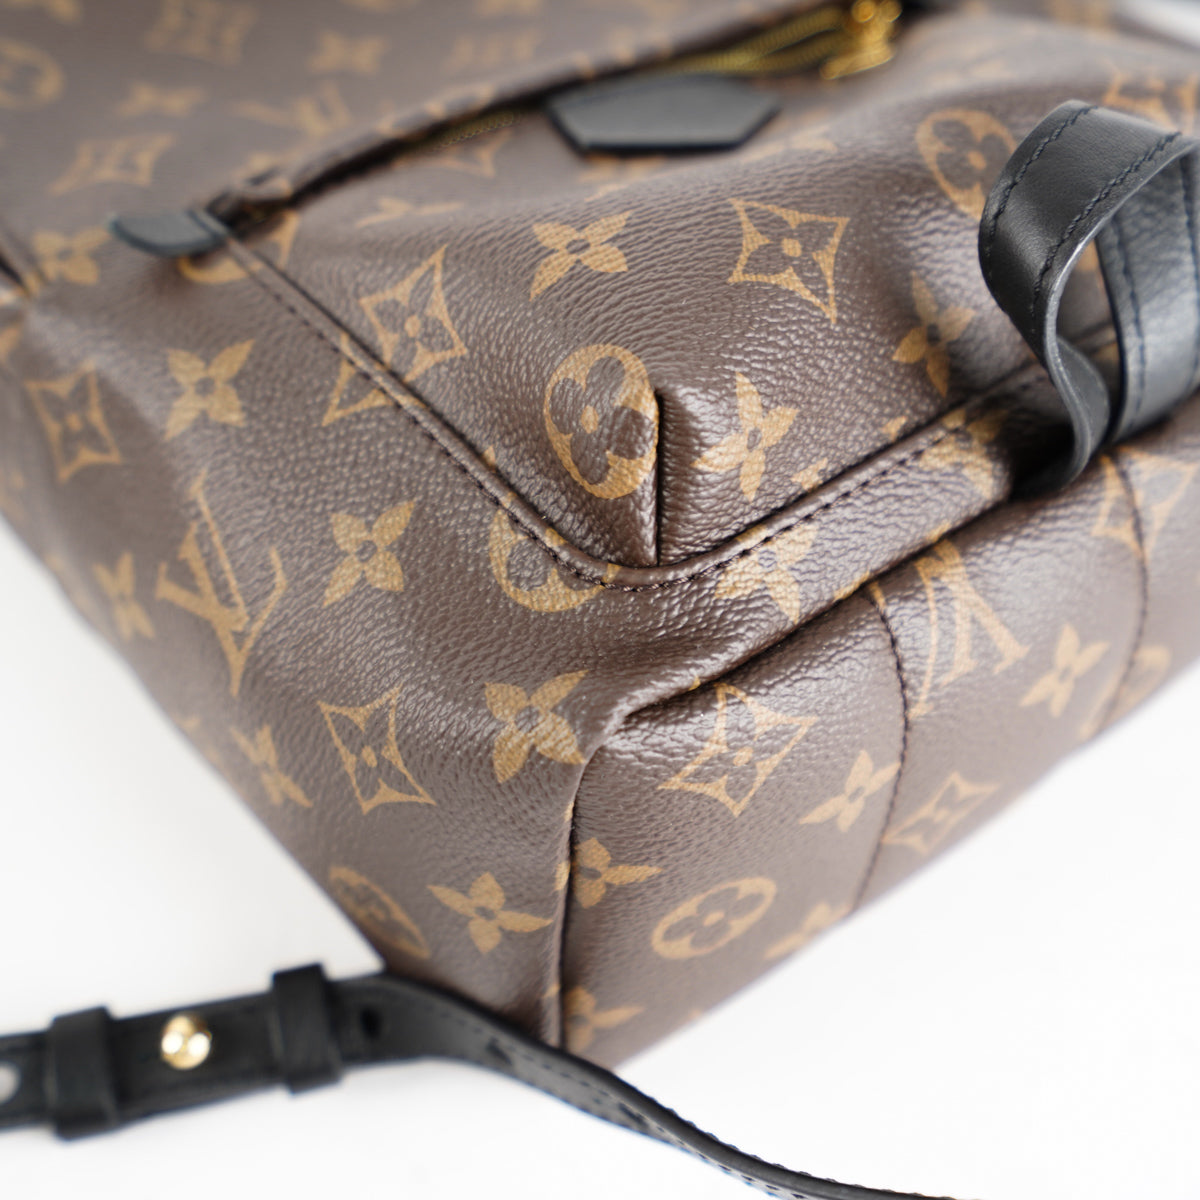 Louis Vuitton Monogram Palm Springs PM Backpack - Brown Backpacks, Handbags  - LOU791697